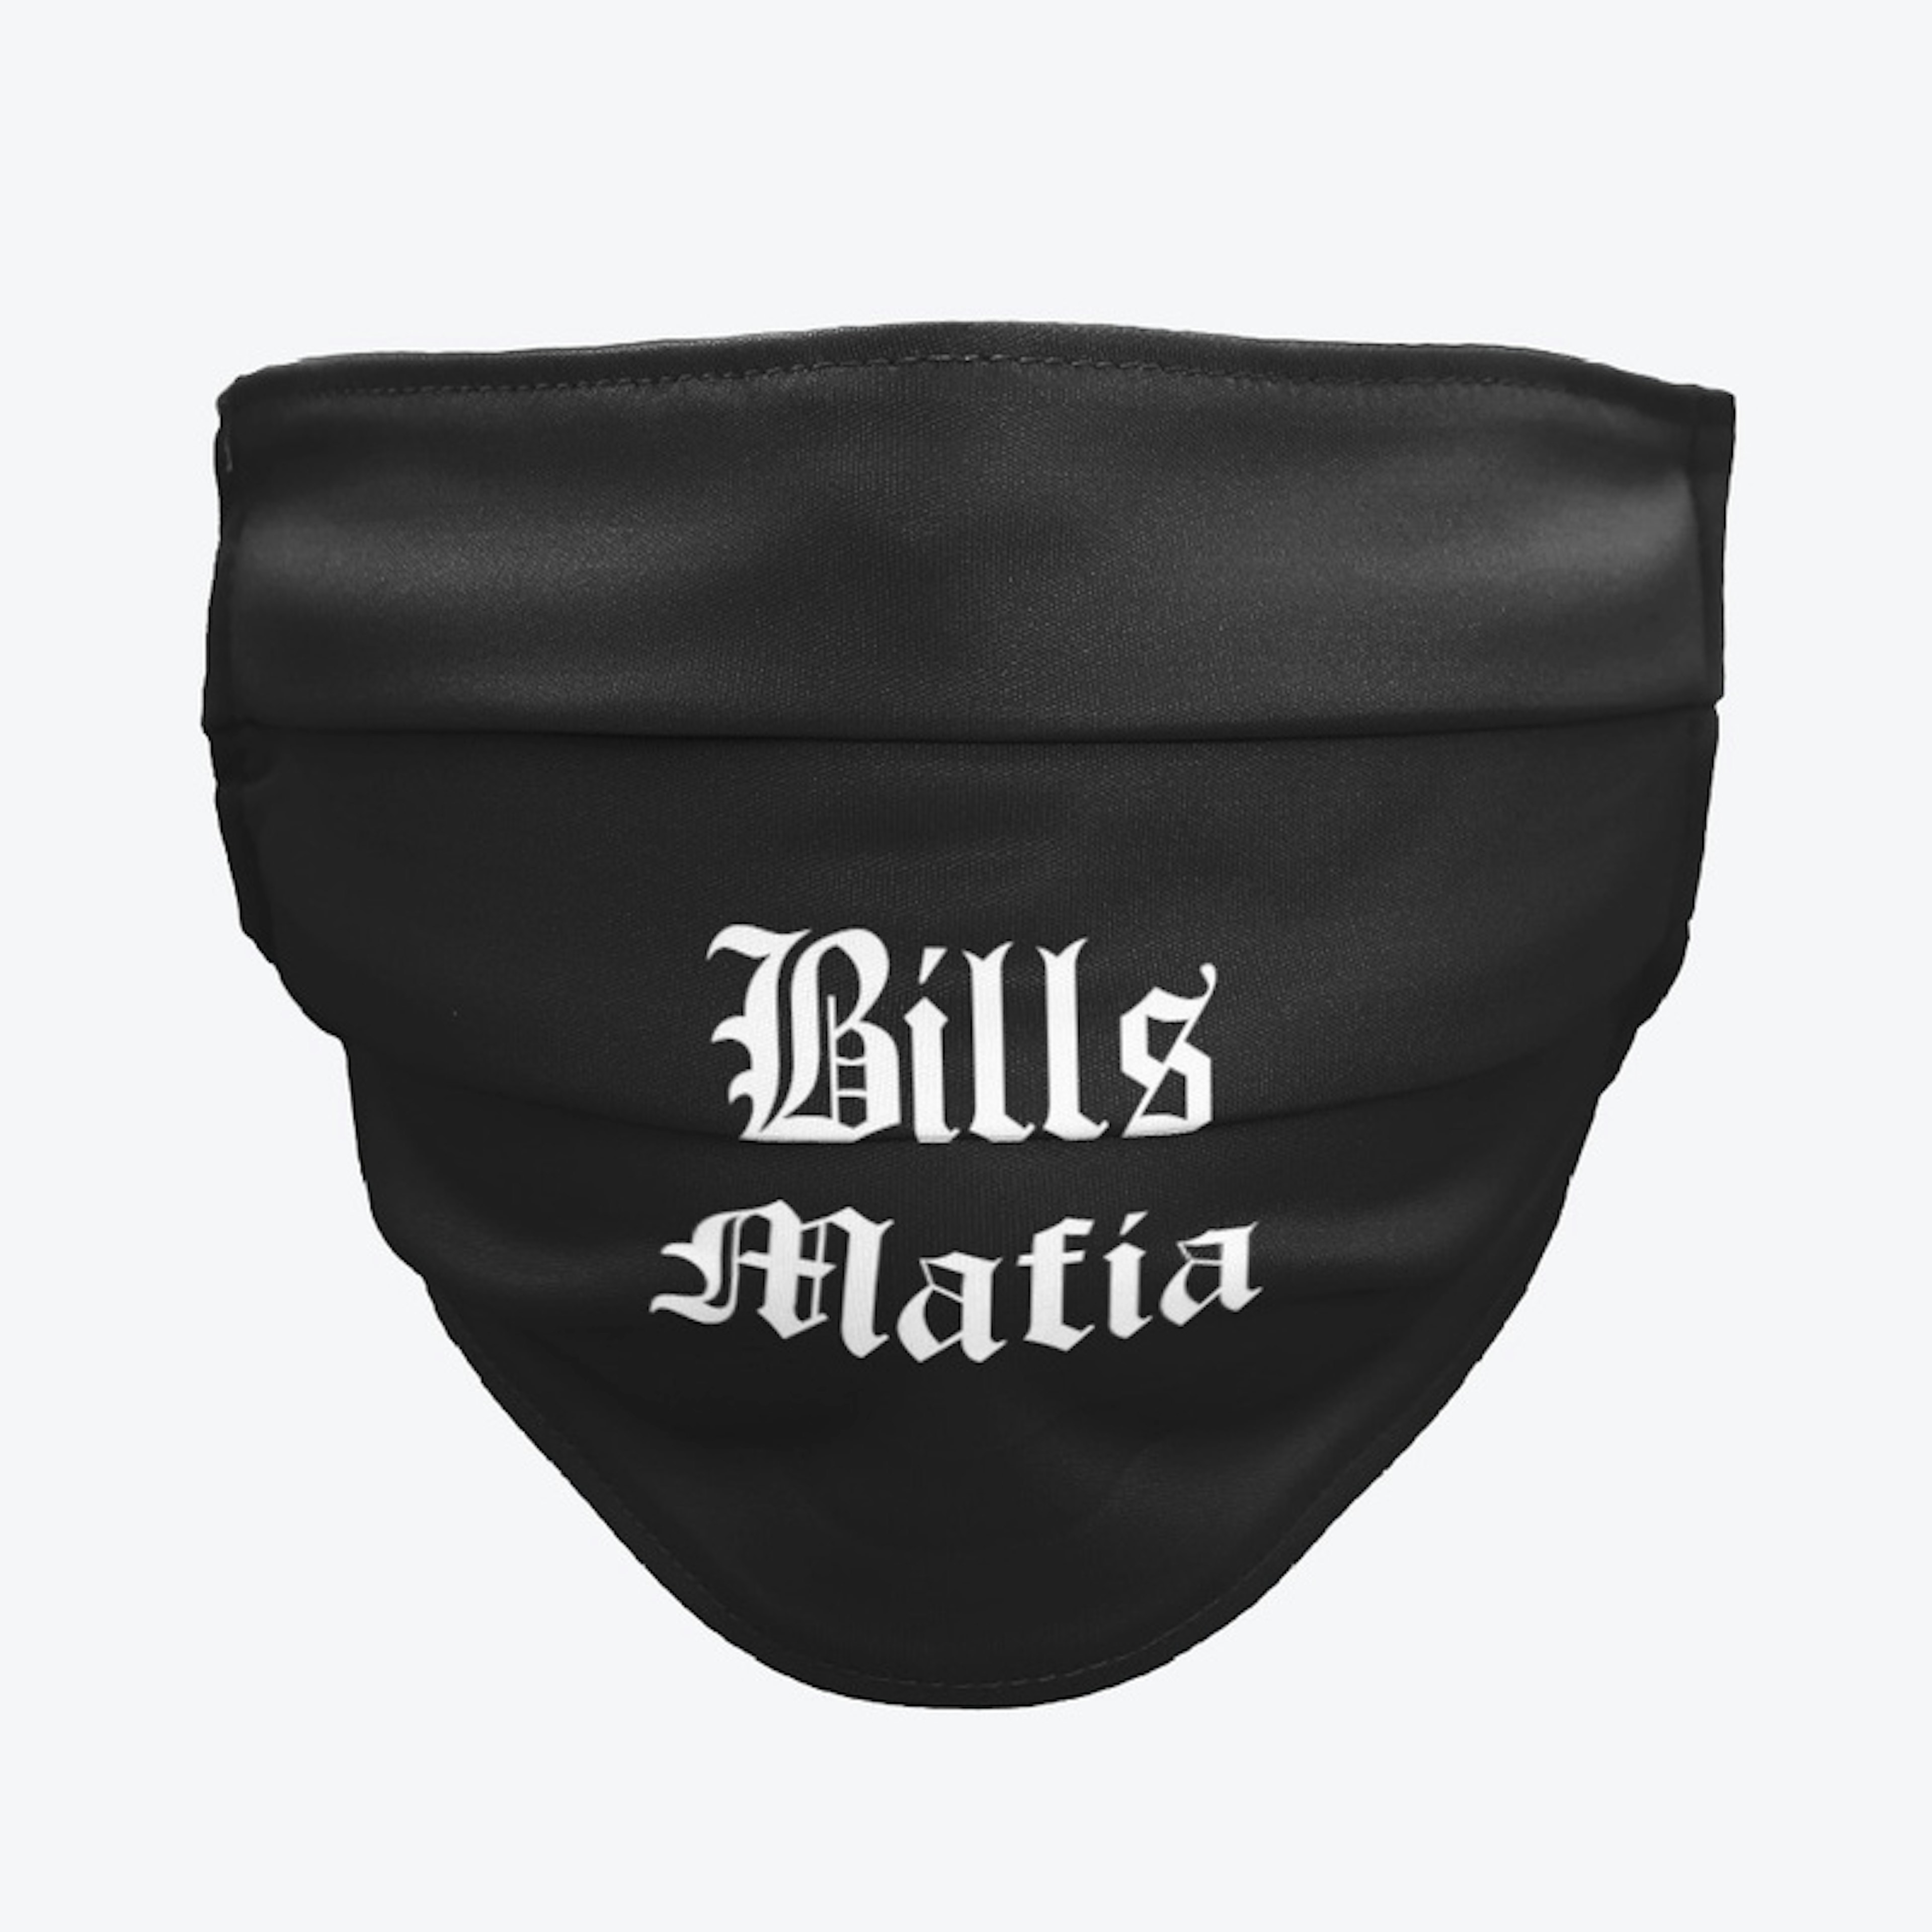 BillsMafia Gear